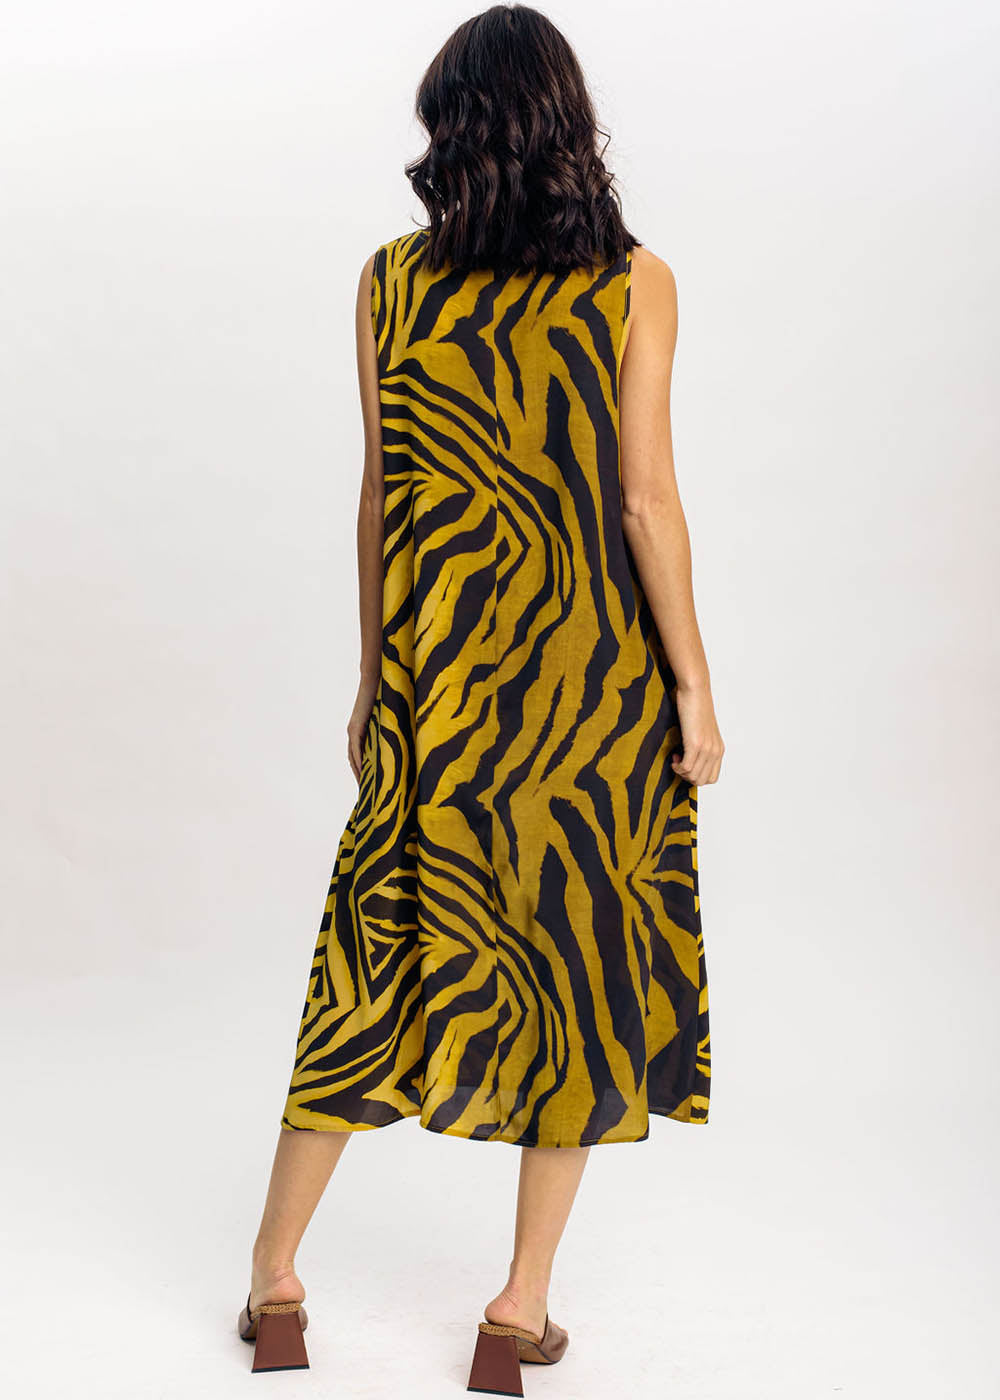 Zebra printed tunic dress